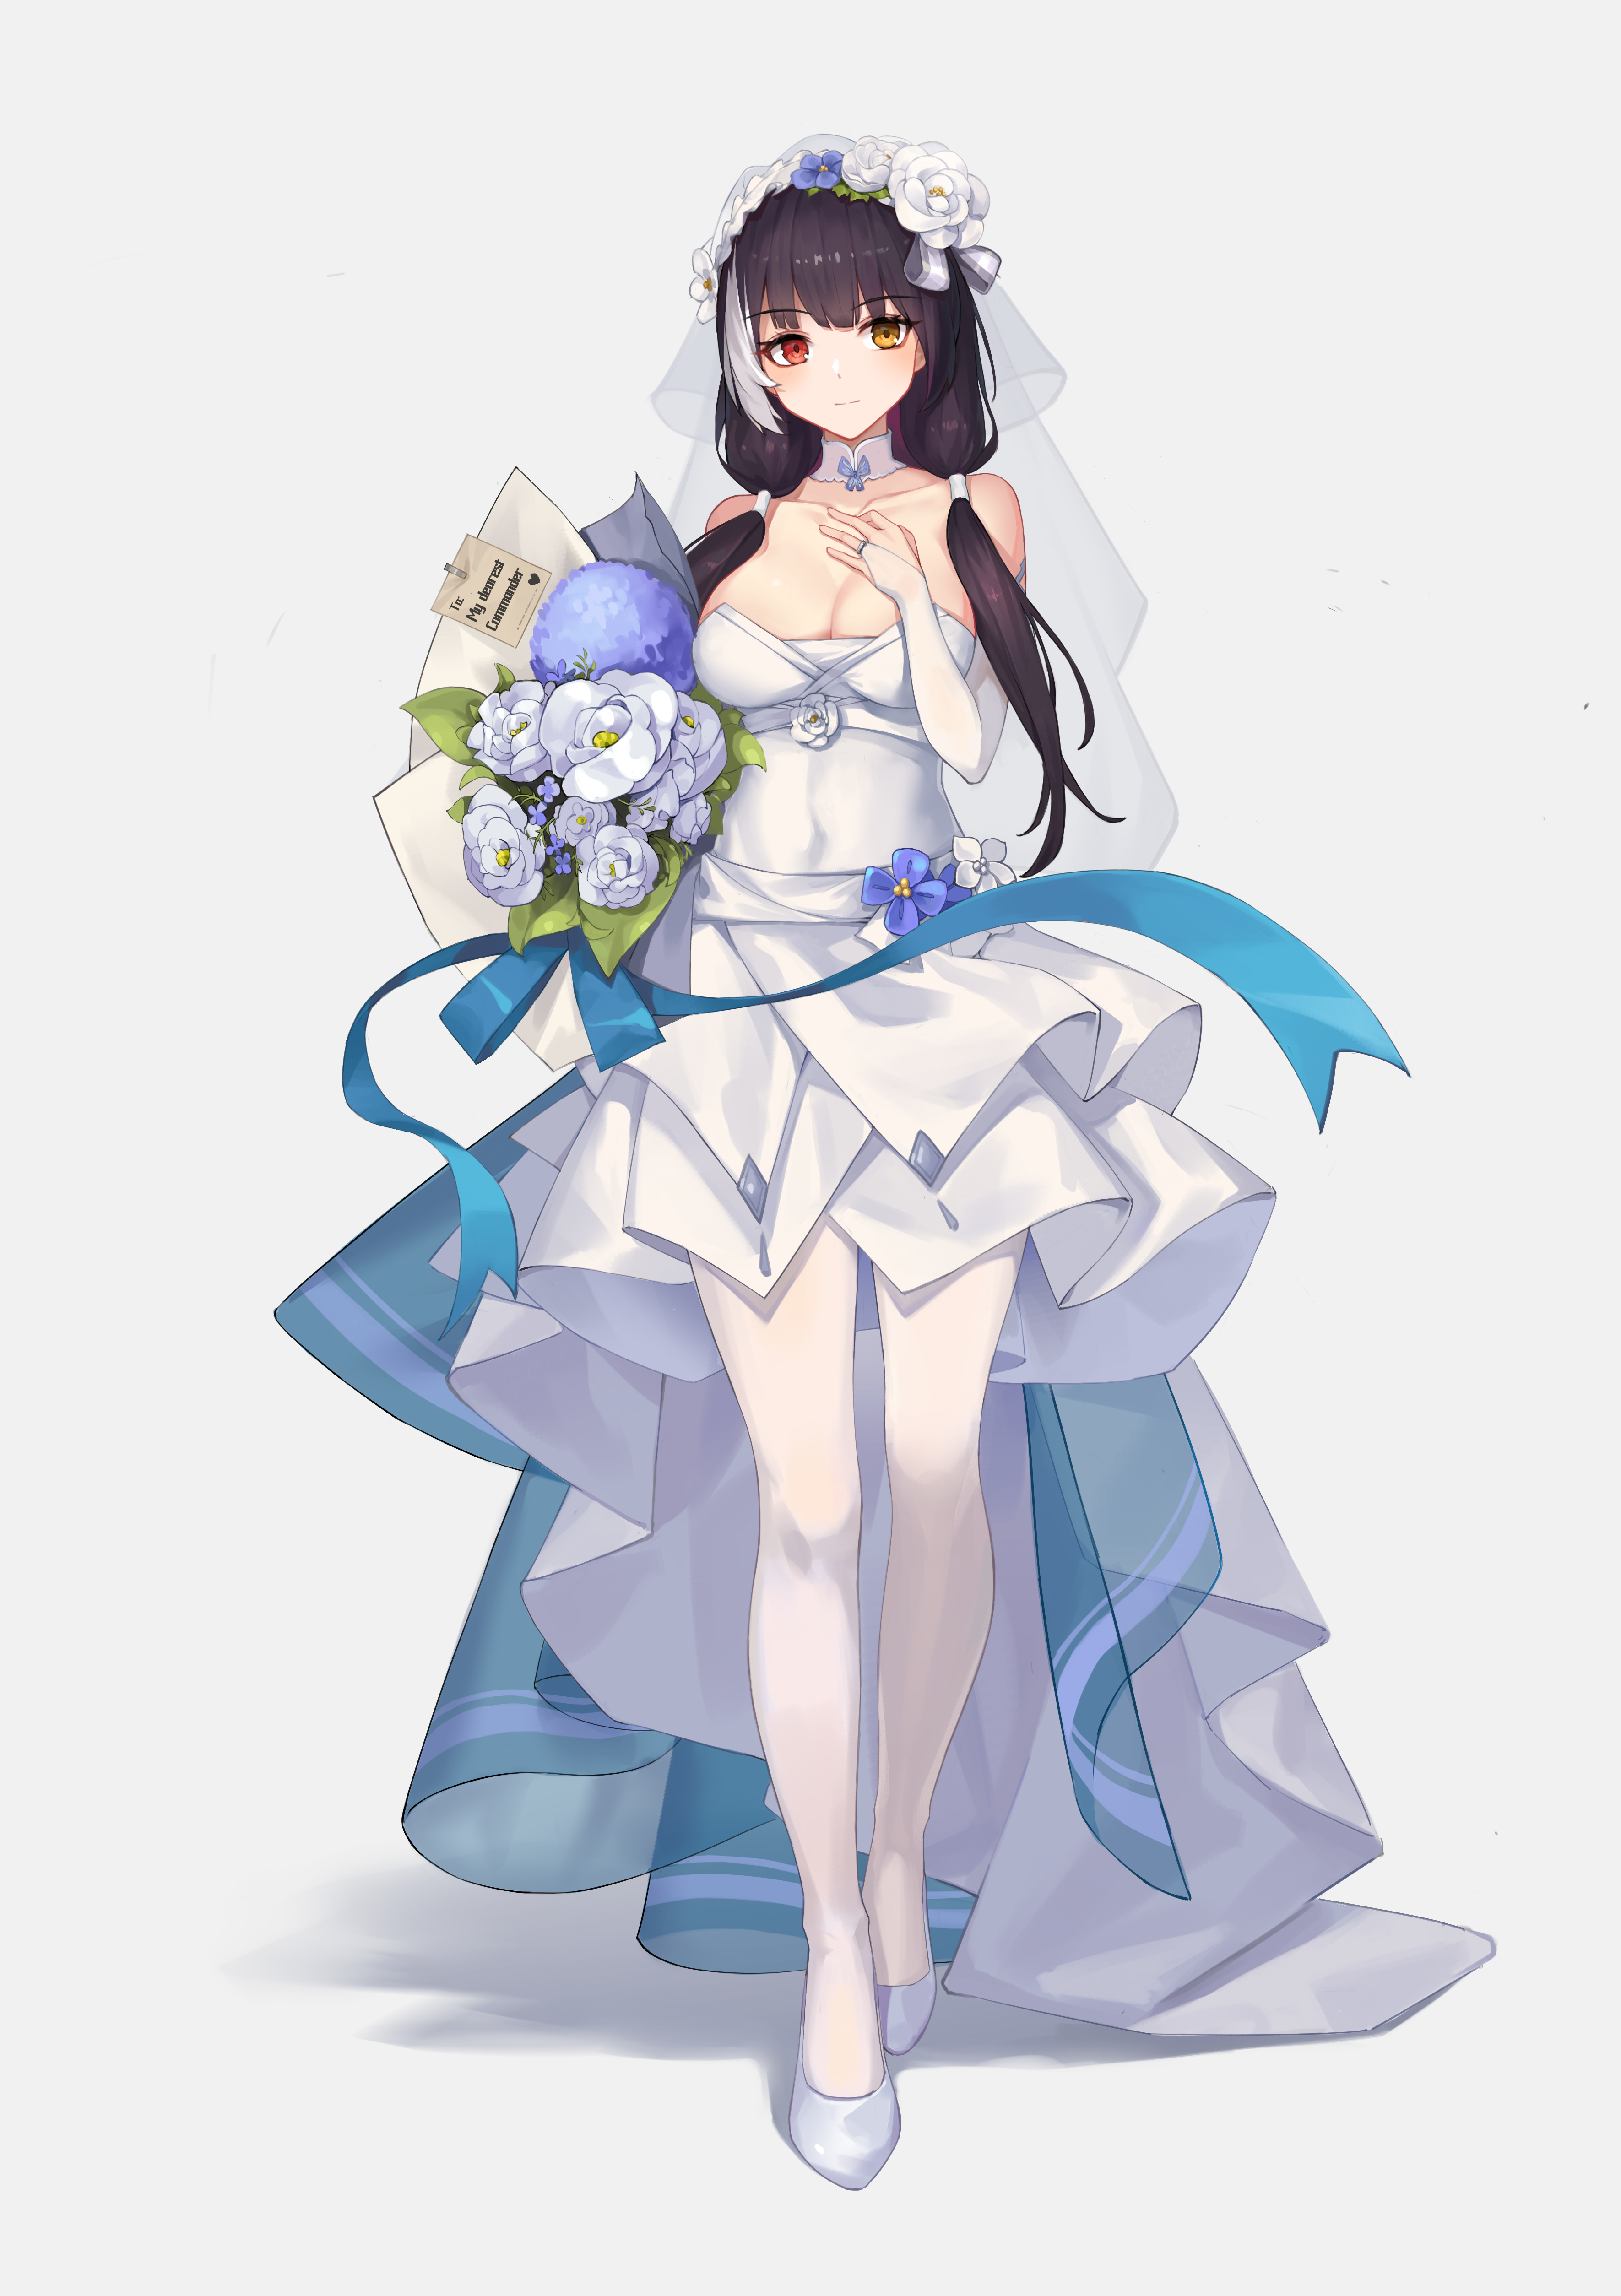 Anime 3541x5016 anime anime girls dress flowers heterochromia wedding dress white background minimalism simple background